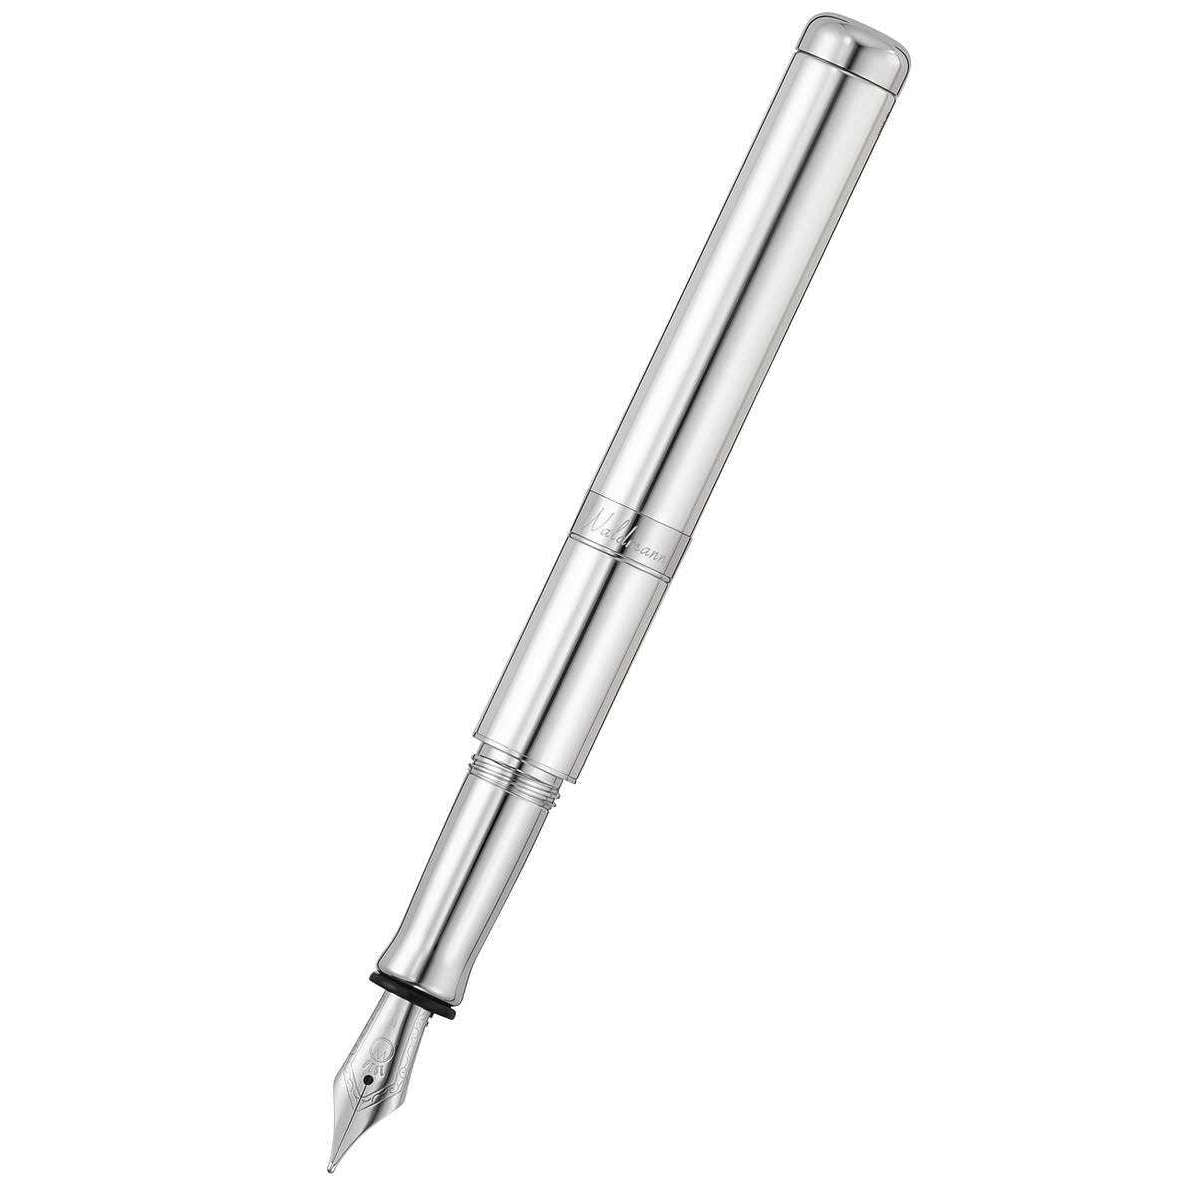 Waldmann Pens Voyager Stainless Steel Nib Fountain Pen - All Silver